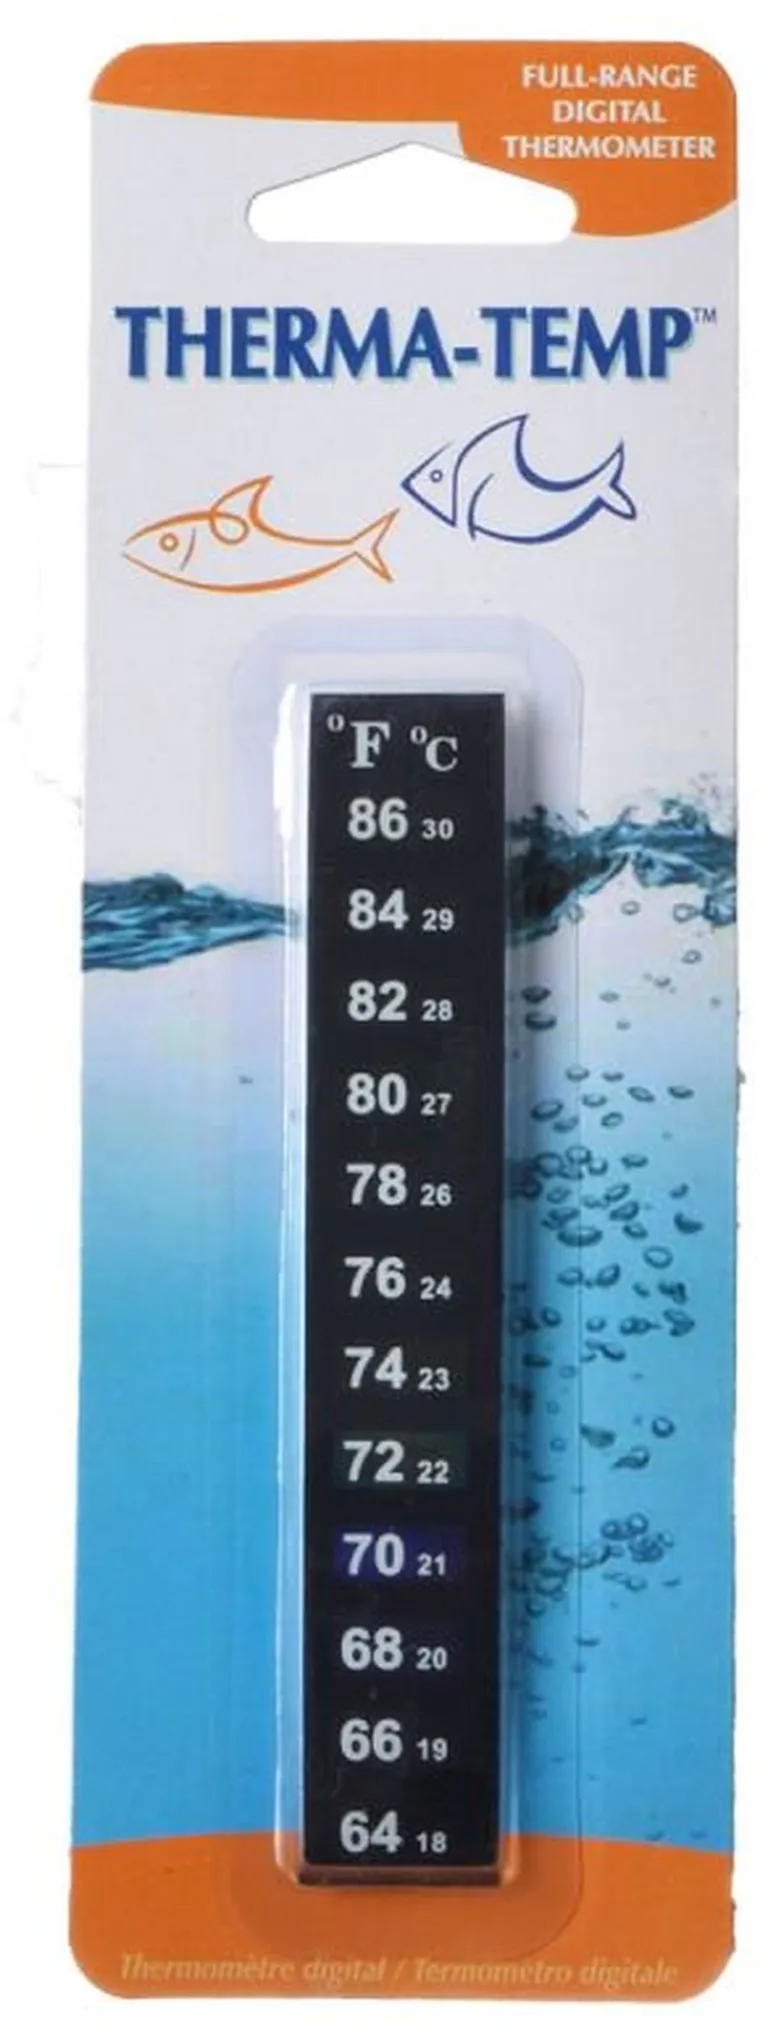 Penn Plax Therma-Temp Full-Range Digital Thermometer Photo 1